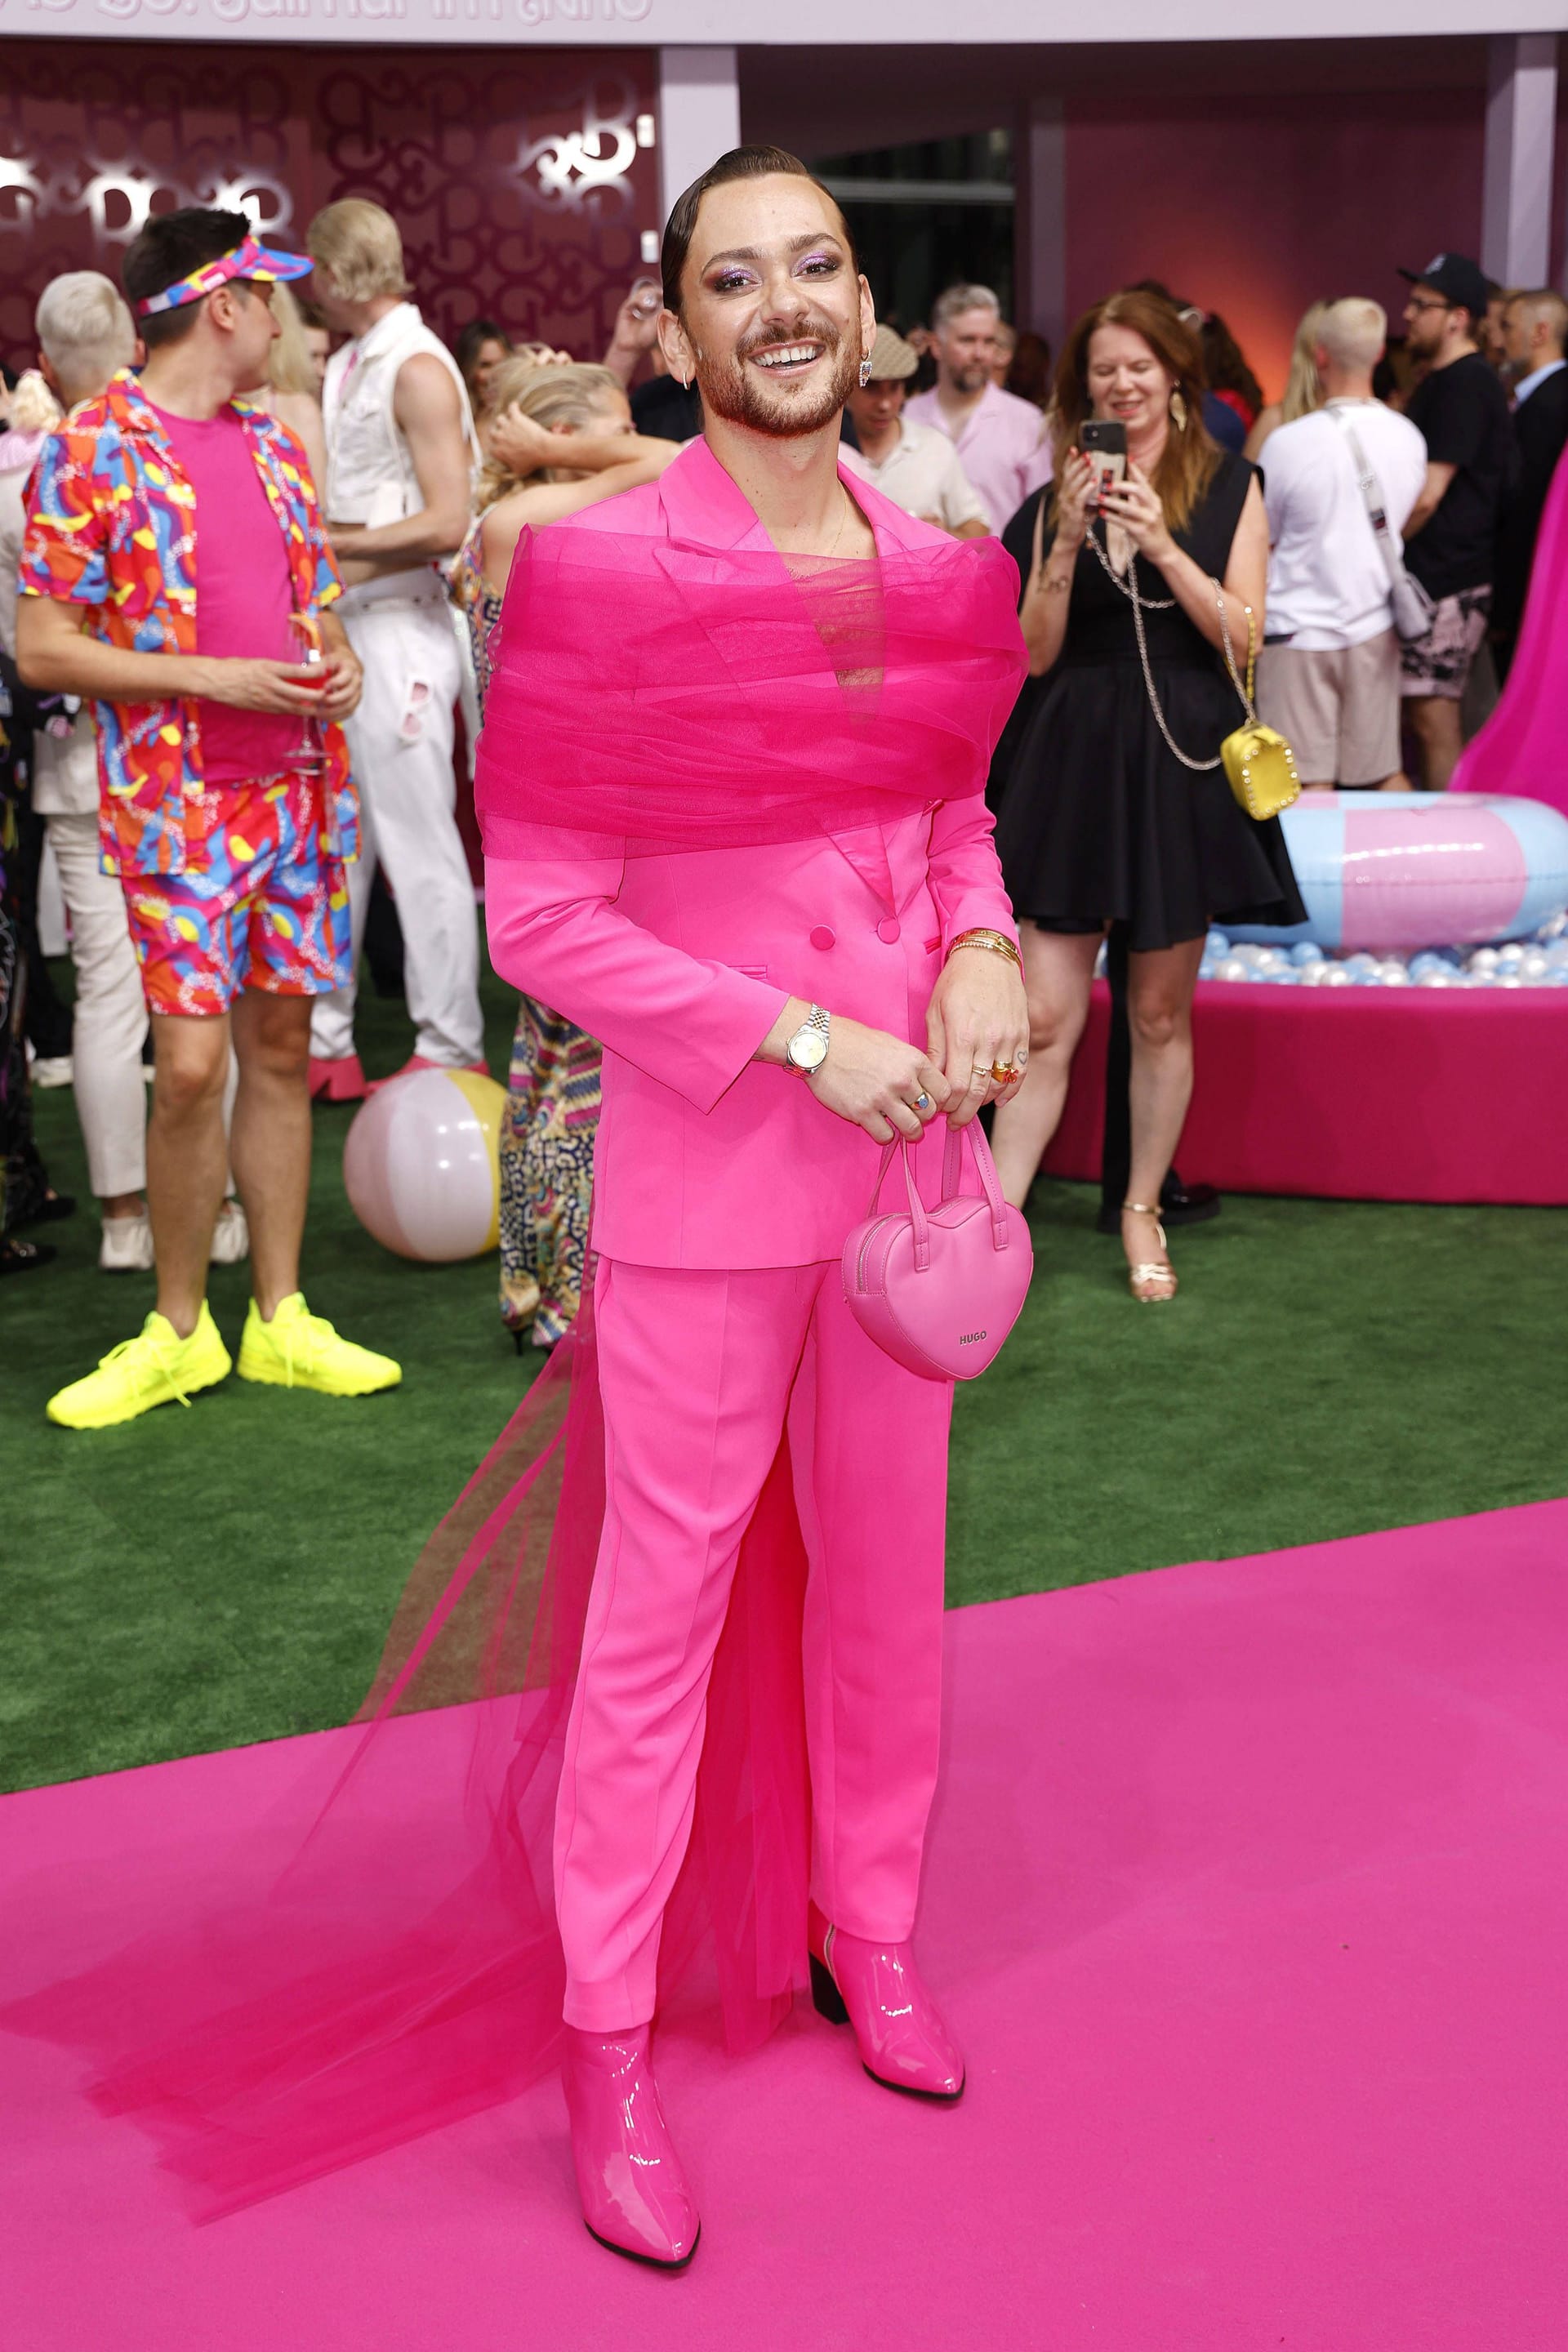 Riccardo Simonetti bei der "Barbie"-Premiere